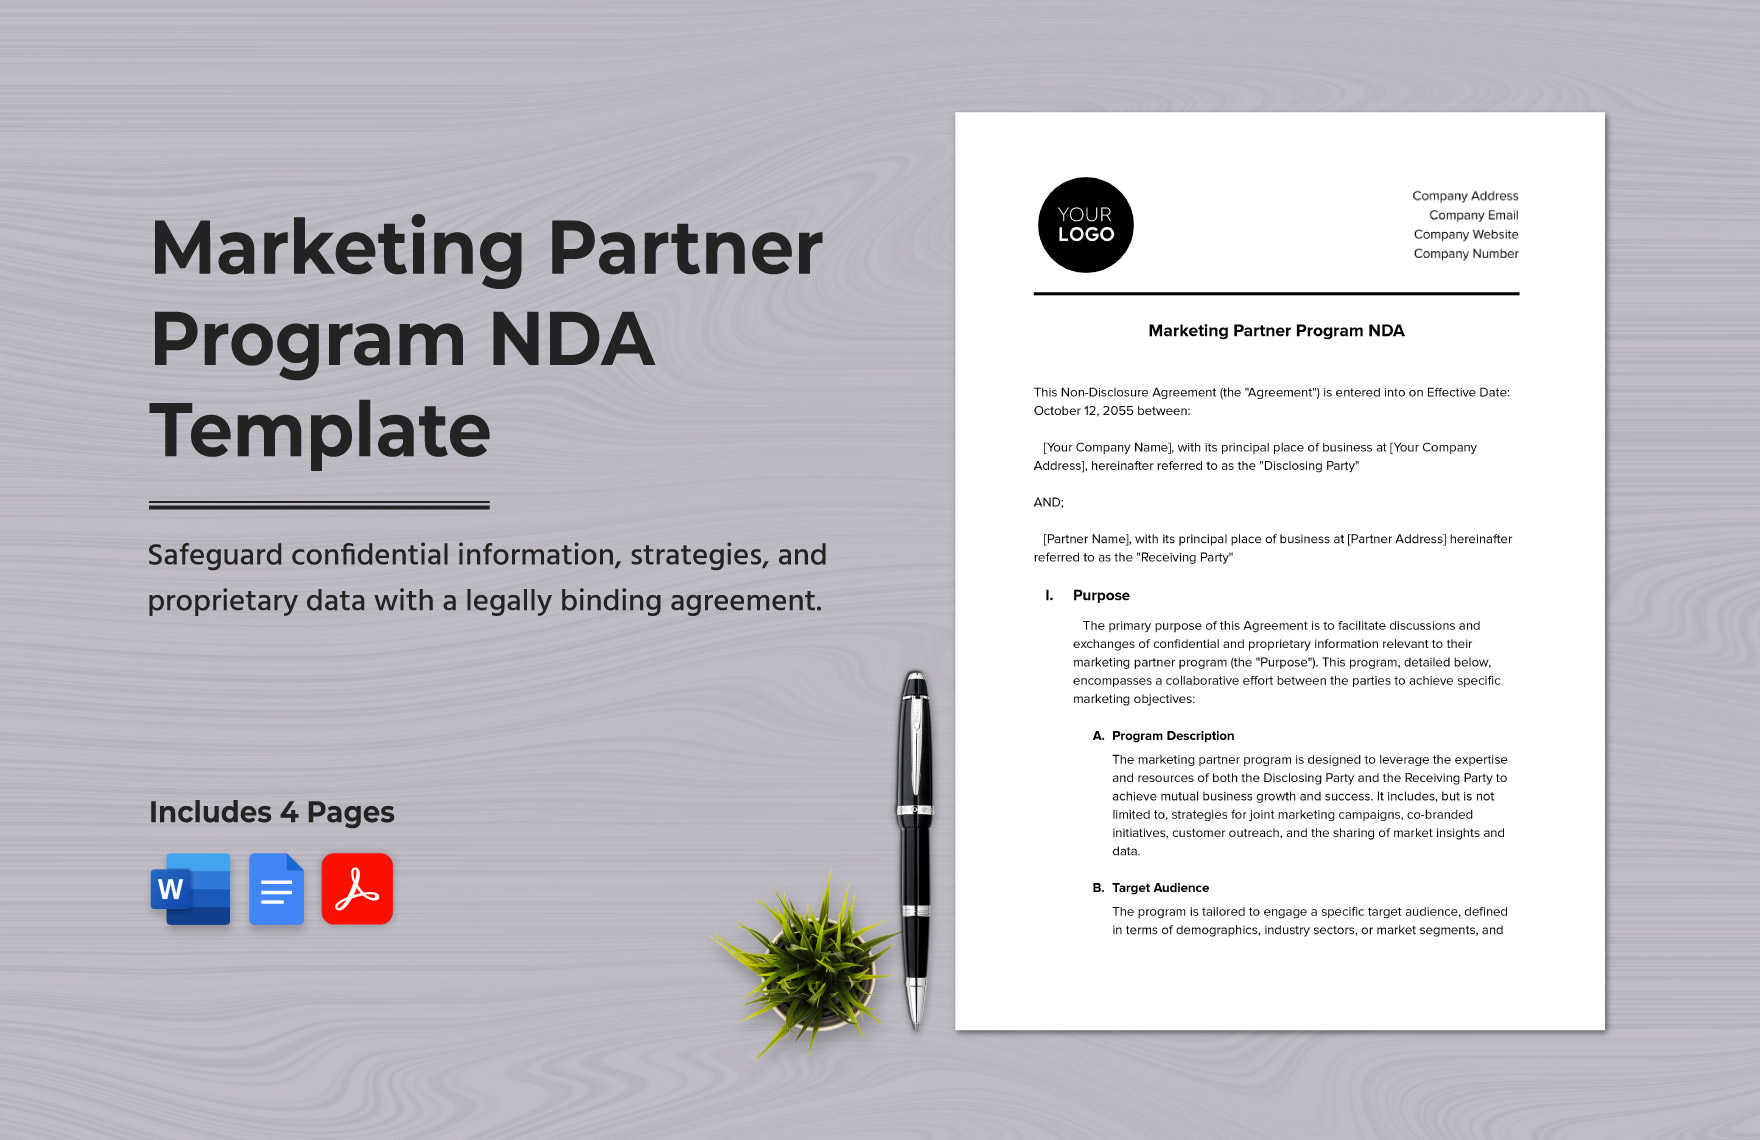 Marketing Partner Program NDA Template